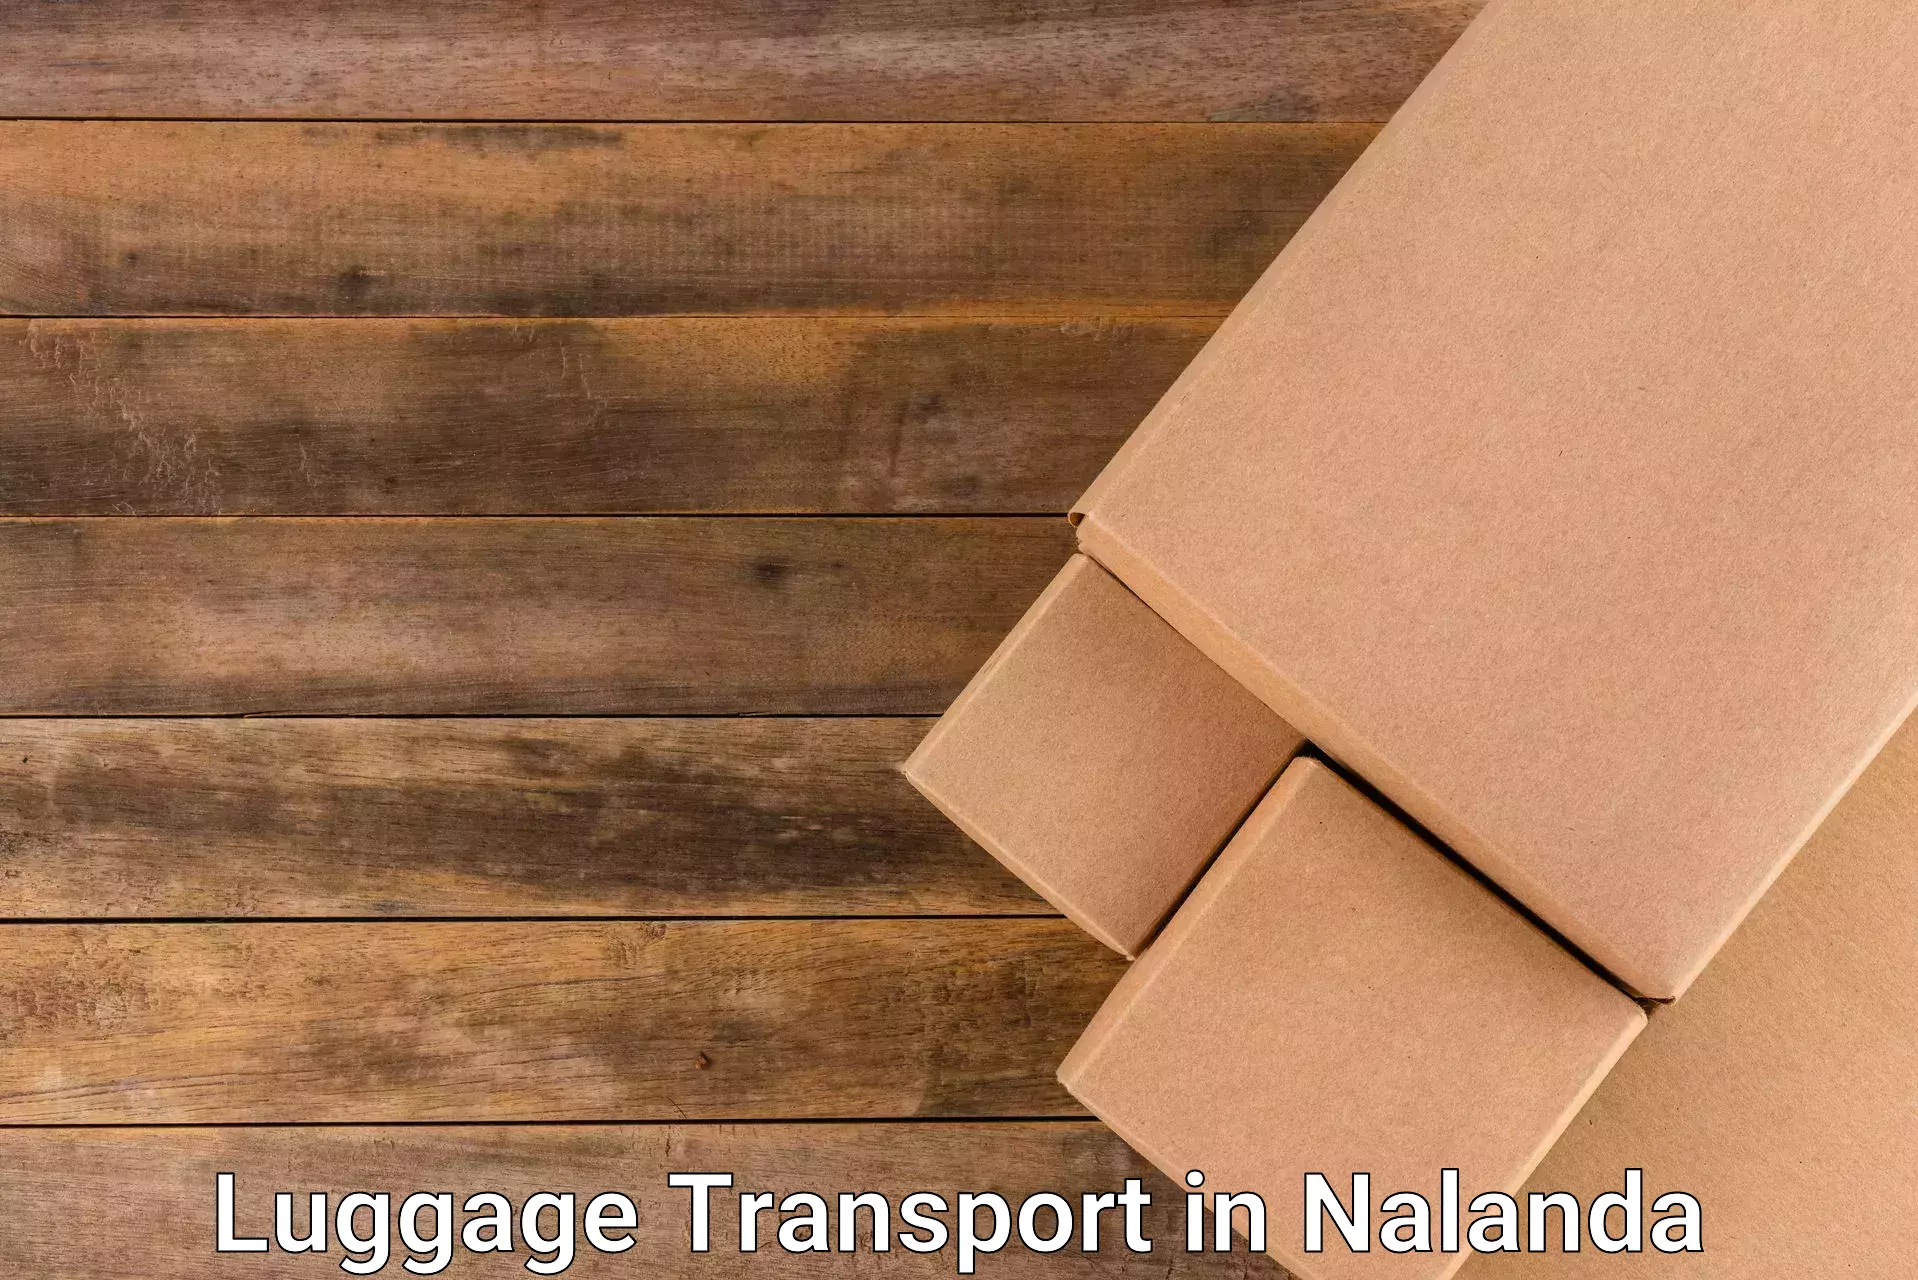 Luggage transport schedule in Nalanda